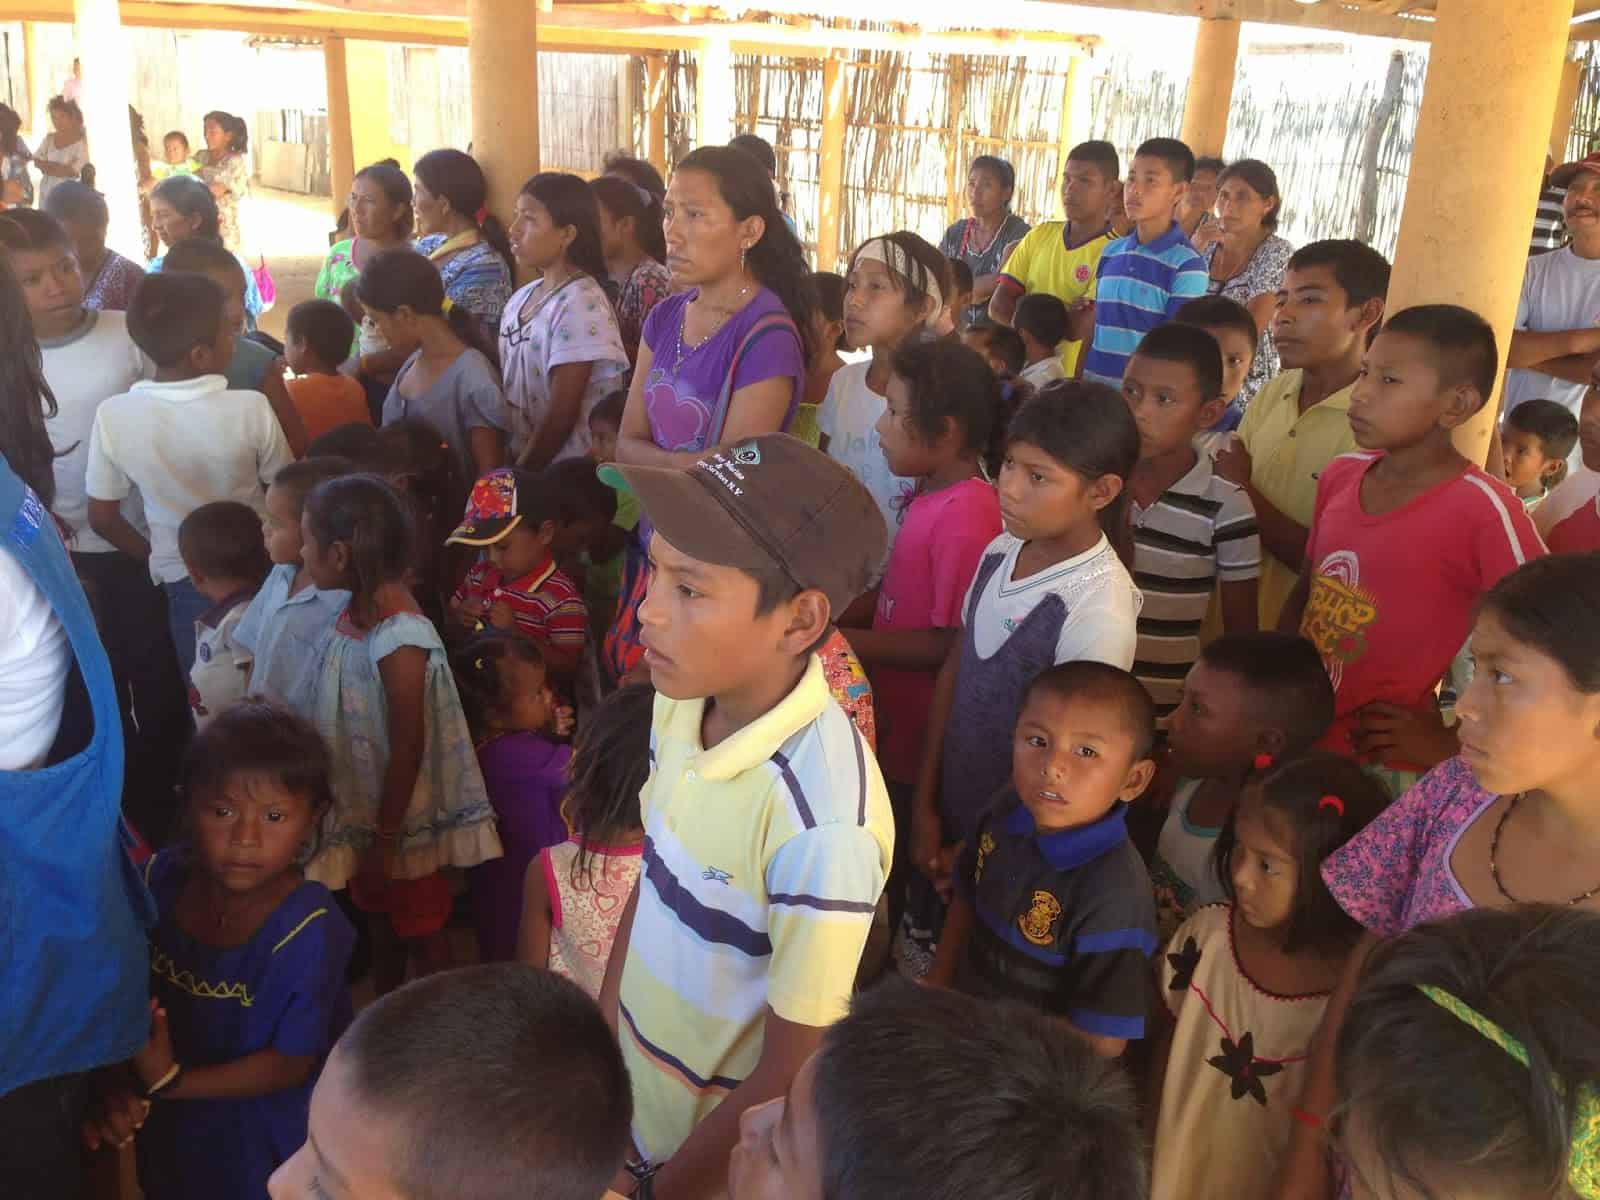 Red Cross / UN Presentation at Hospedaje Alexandra at Punta Gallinas, La Guajira, Colombia